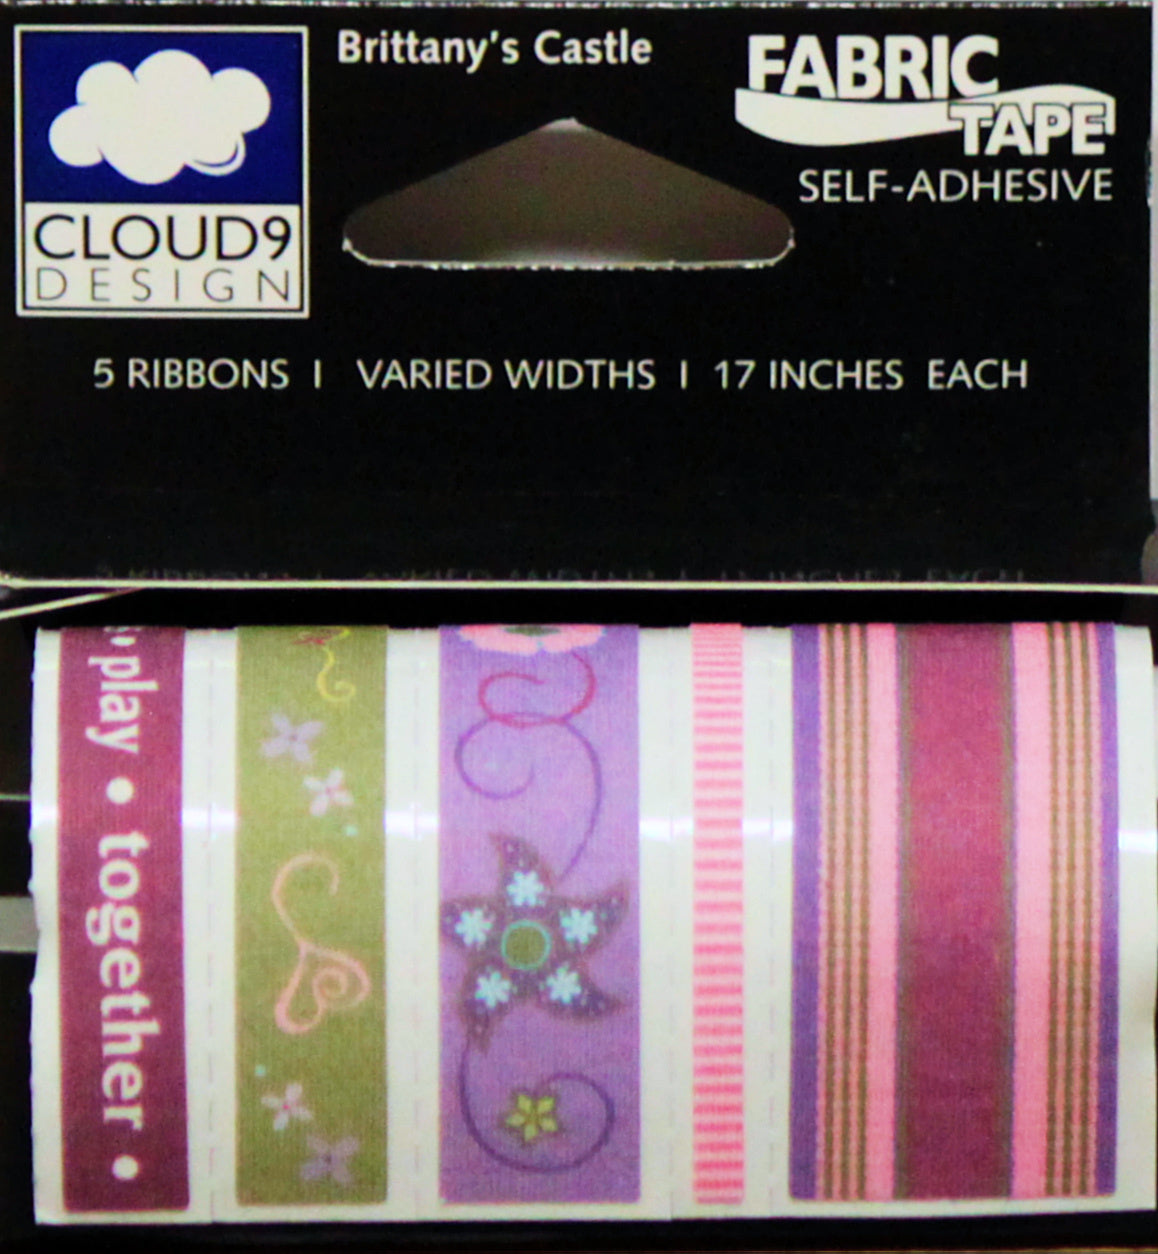 Cloud 9 Design 5pc Ribbon Fabric Tape Brittany's Castle